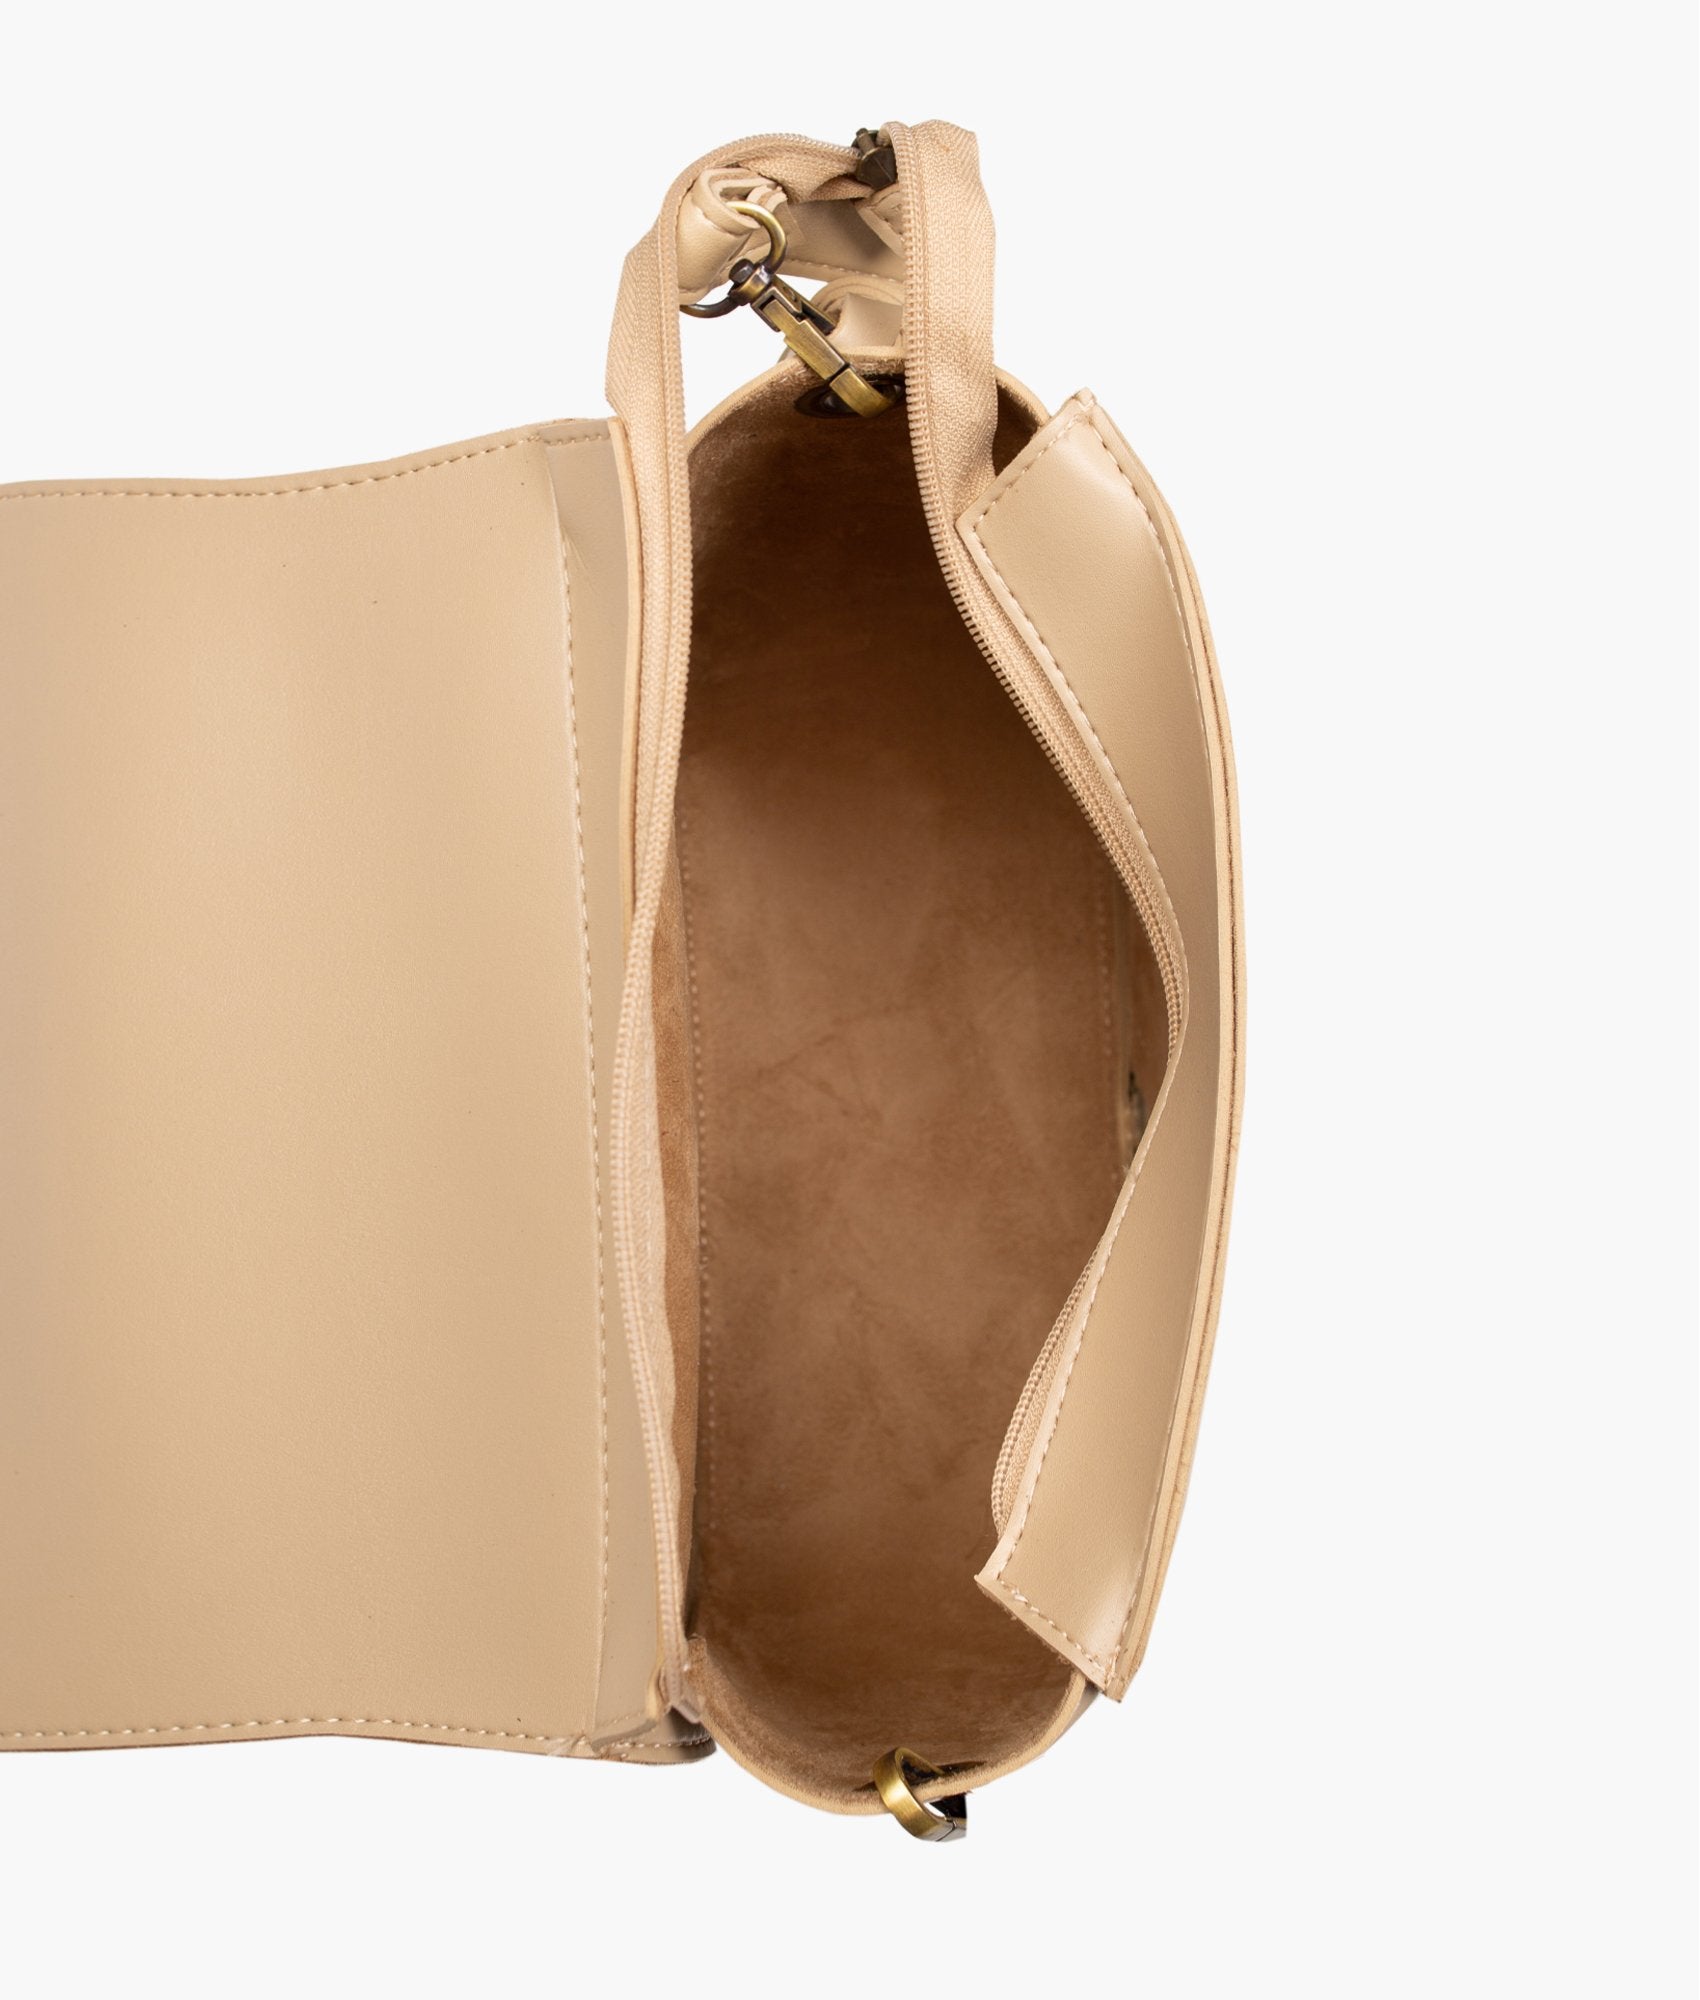 Off-white foldover saddle bag